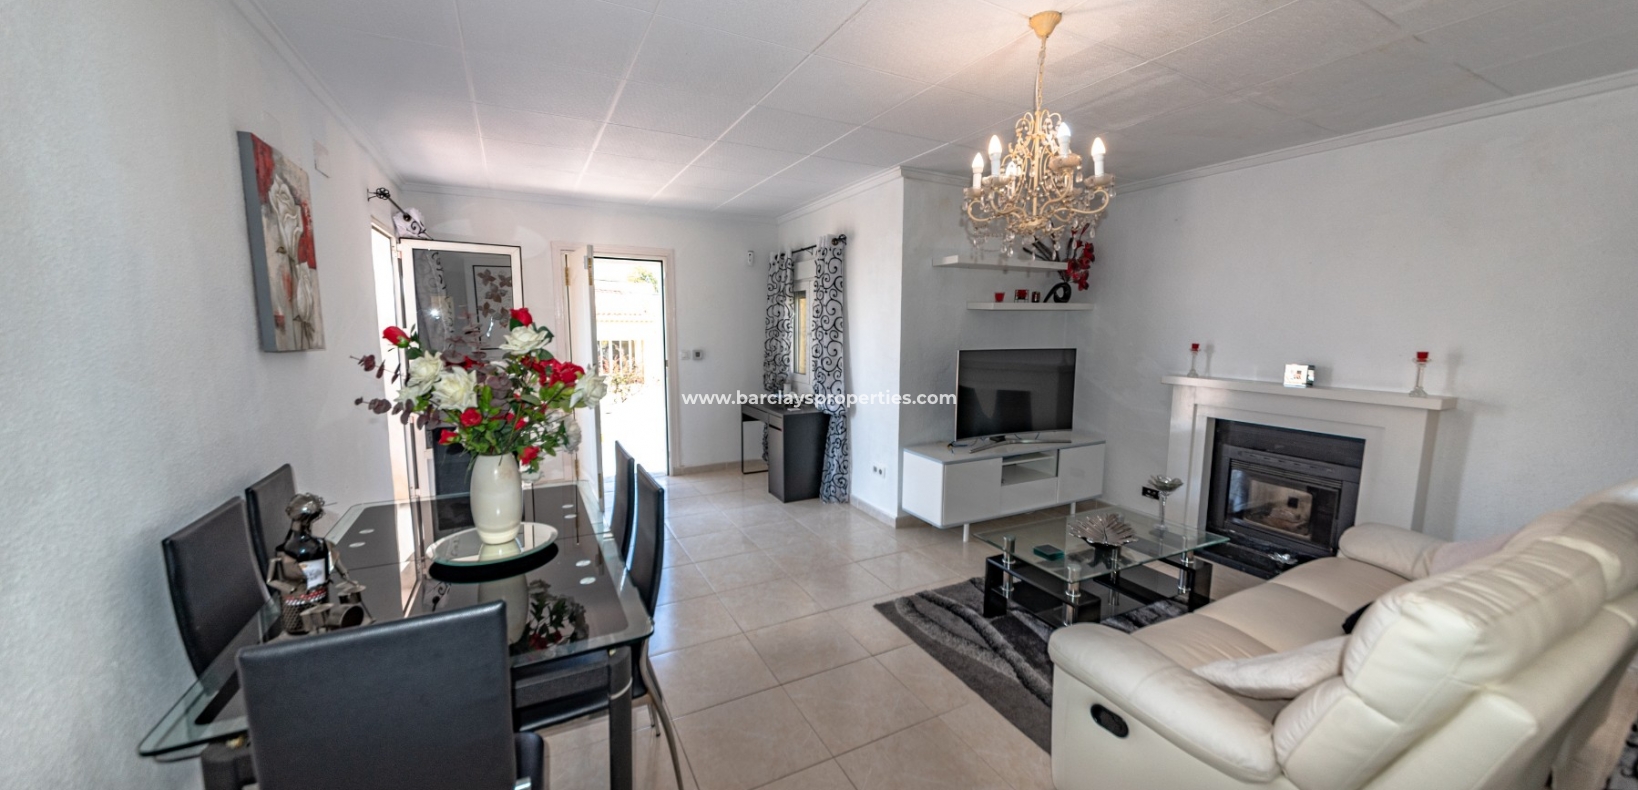 Living Room - House for sale in Urbanisation La Marina